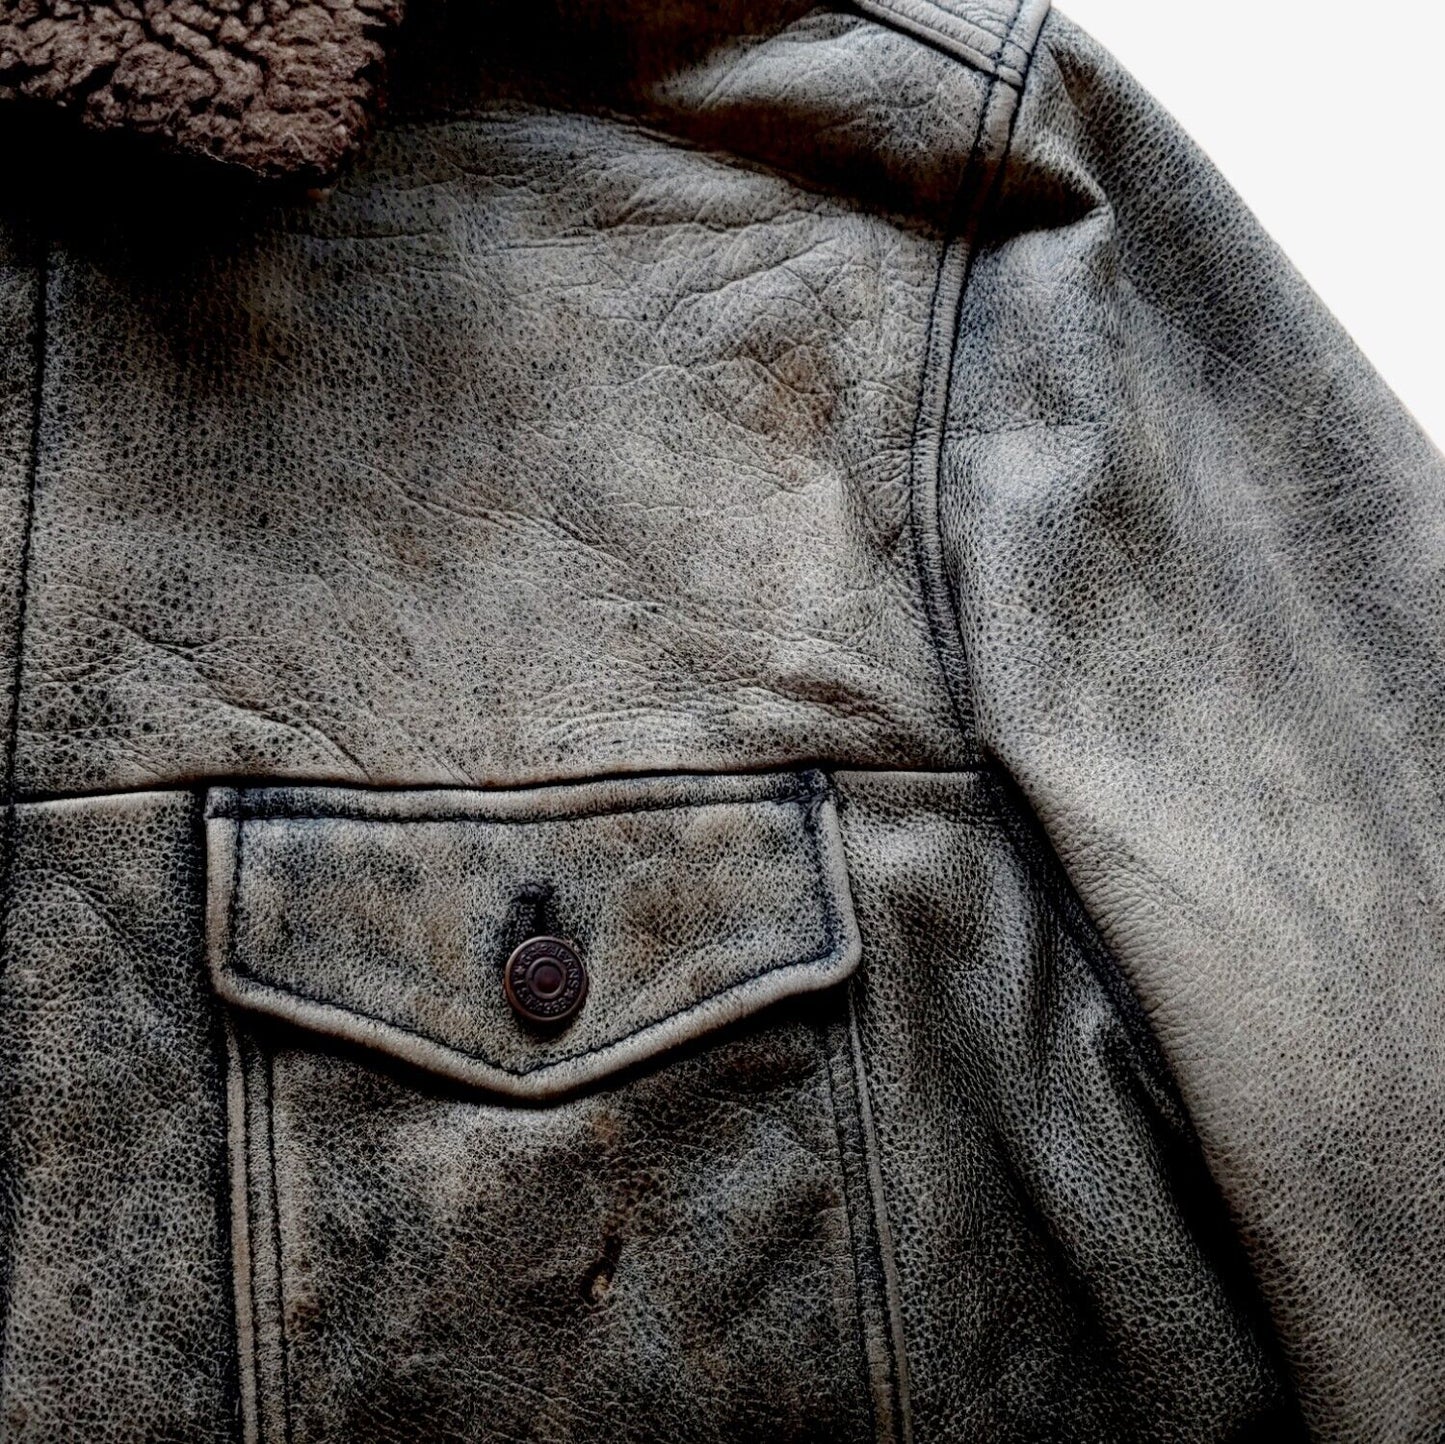 Vintage 1990s GAP Leather Overcoat With Fur Collar Pocket - Casspios Dream